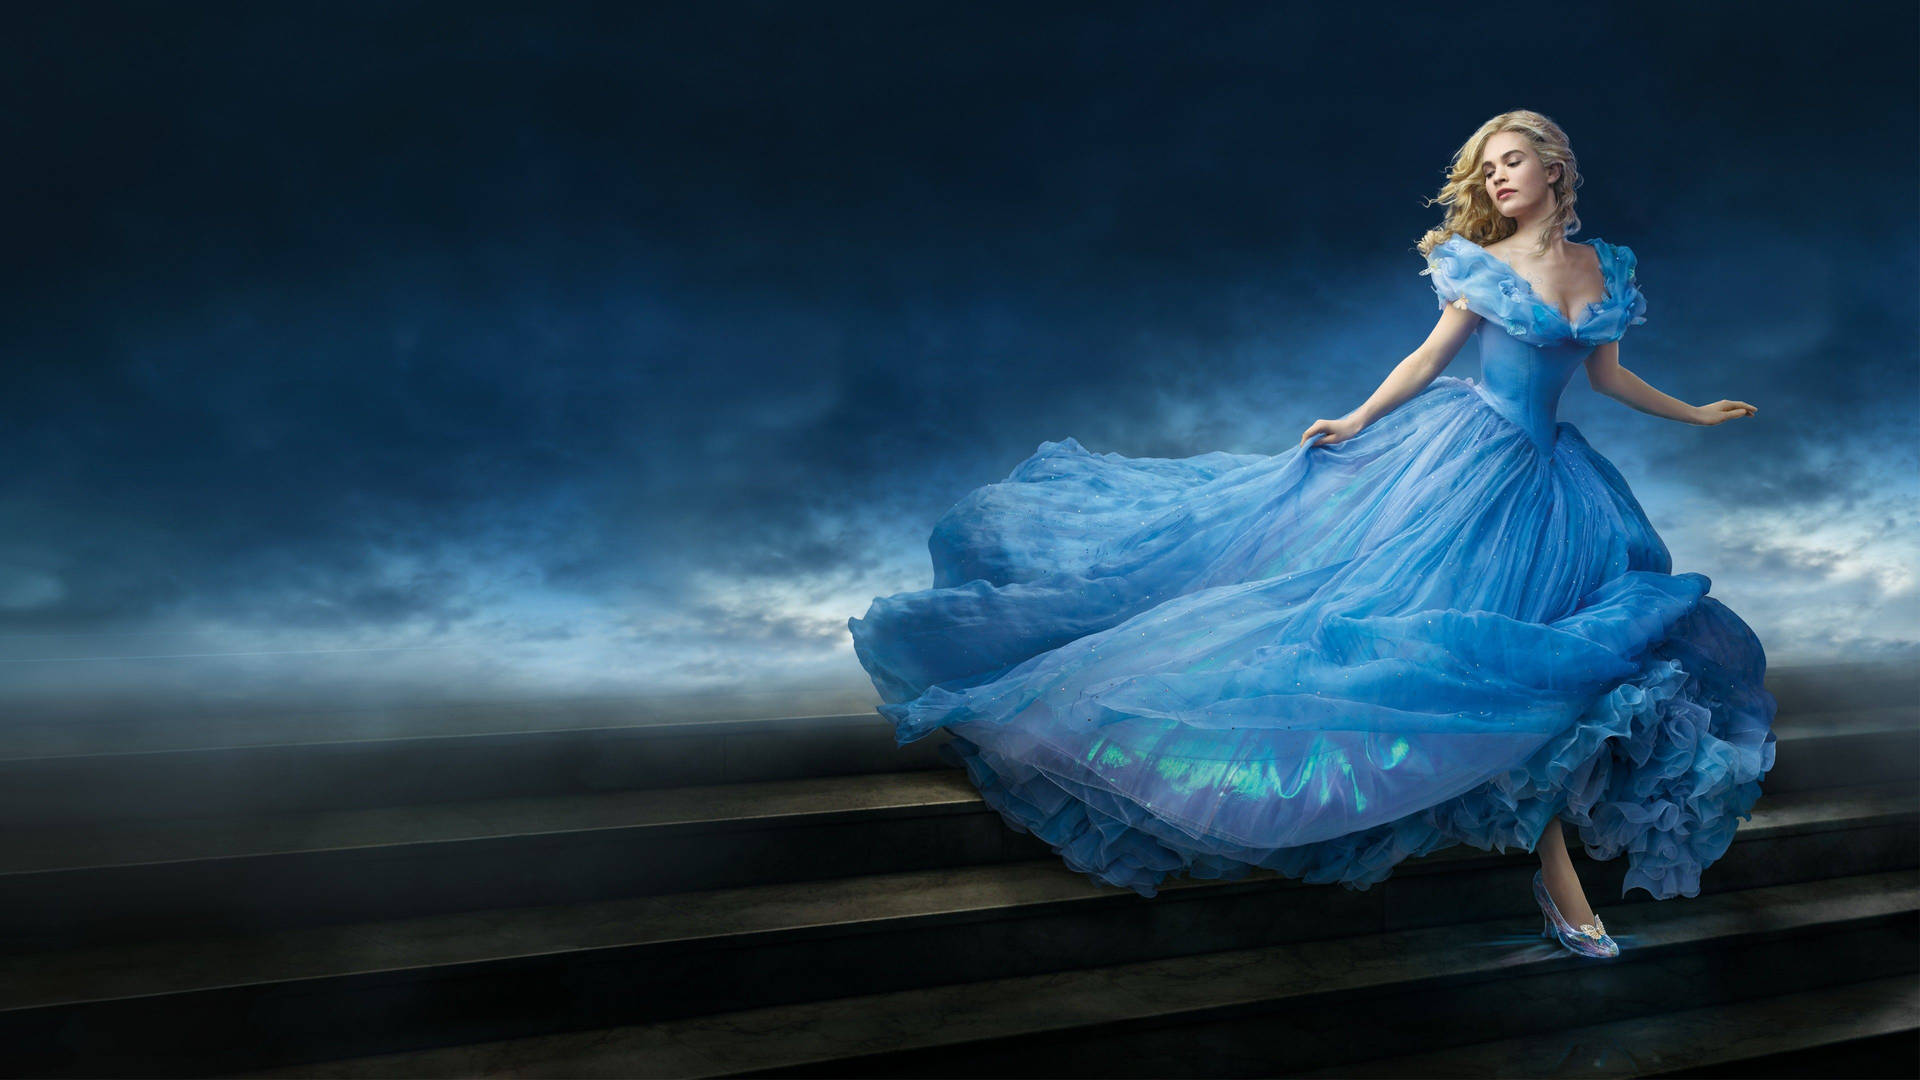 Top 999+ Cinderella Wallpaper Full HD, 4K✅Free to Use